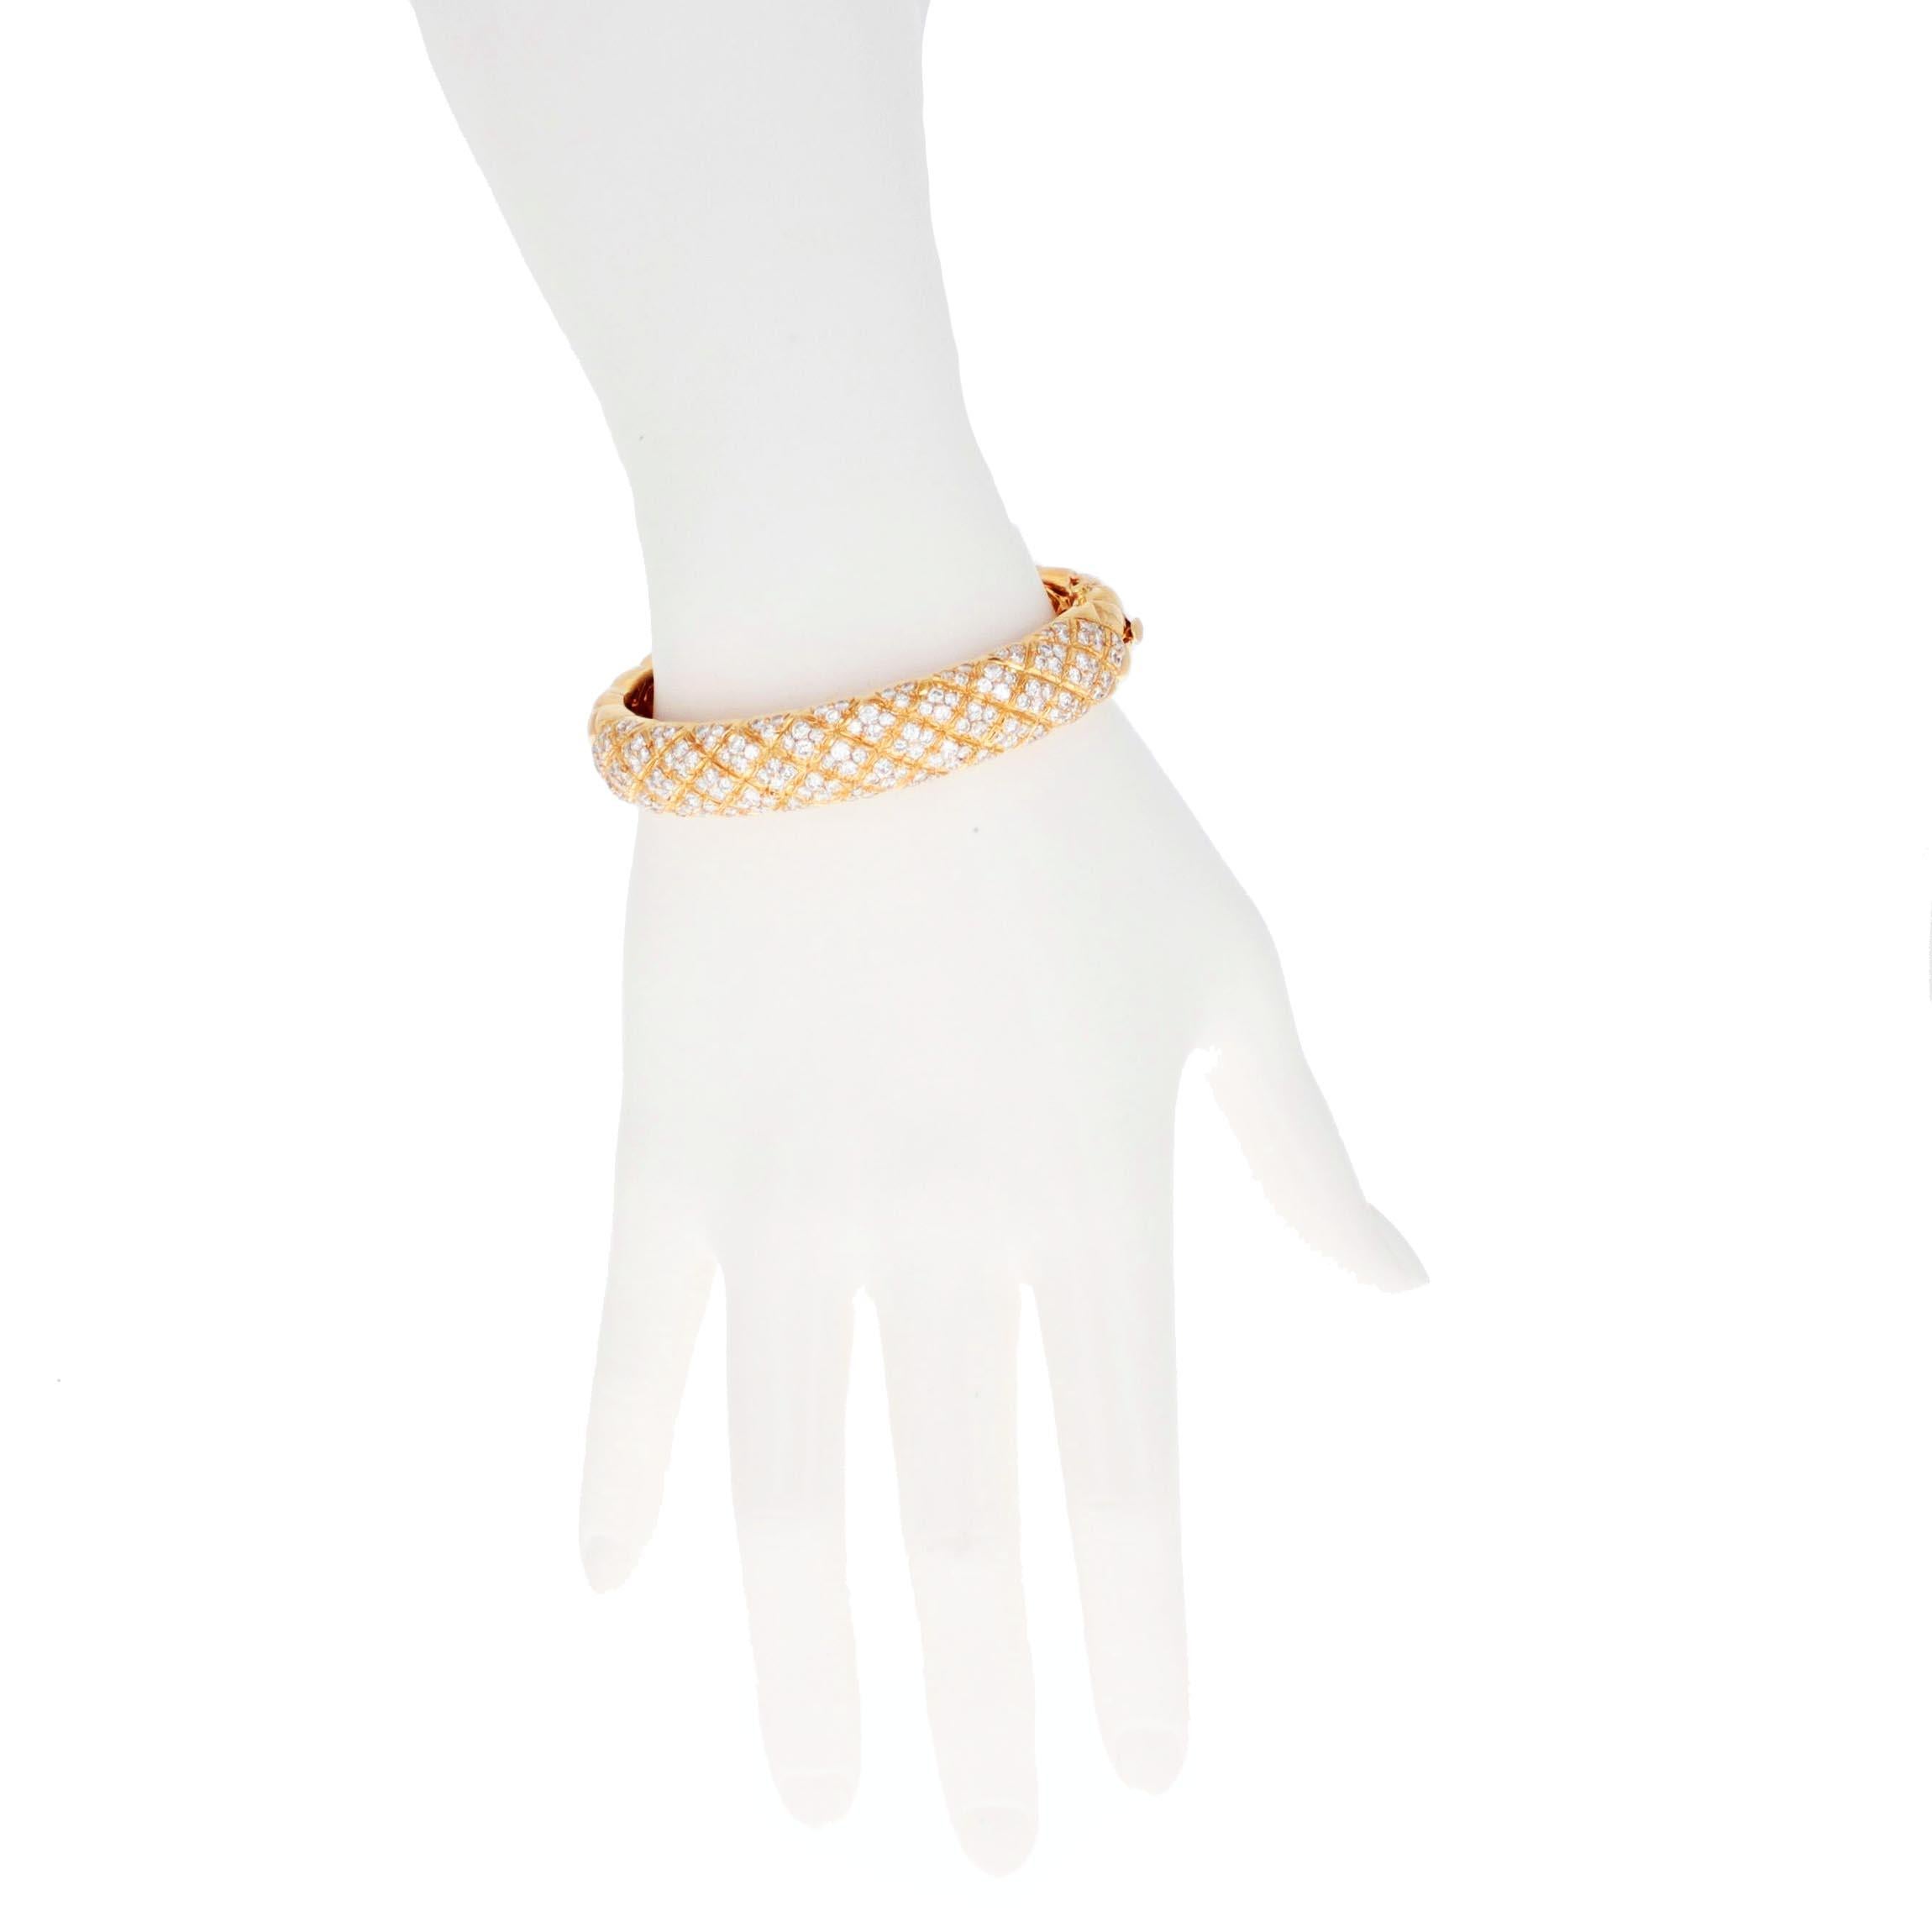 Modern Van Cleef & Arpels Diamond and Gold Bangle Bracelet, French